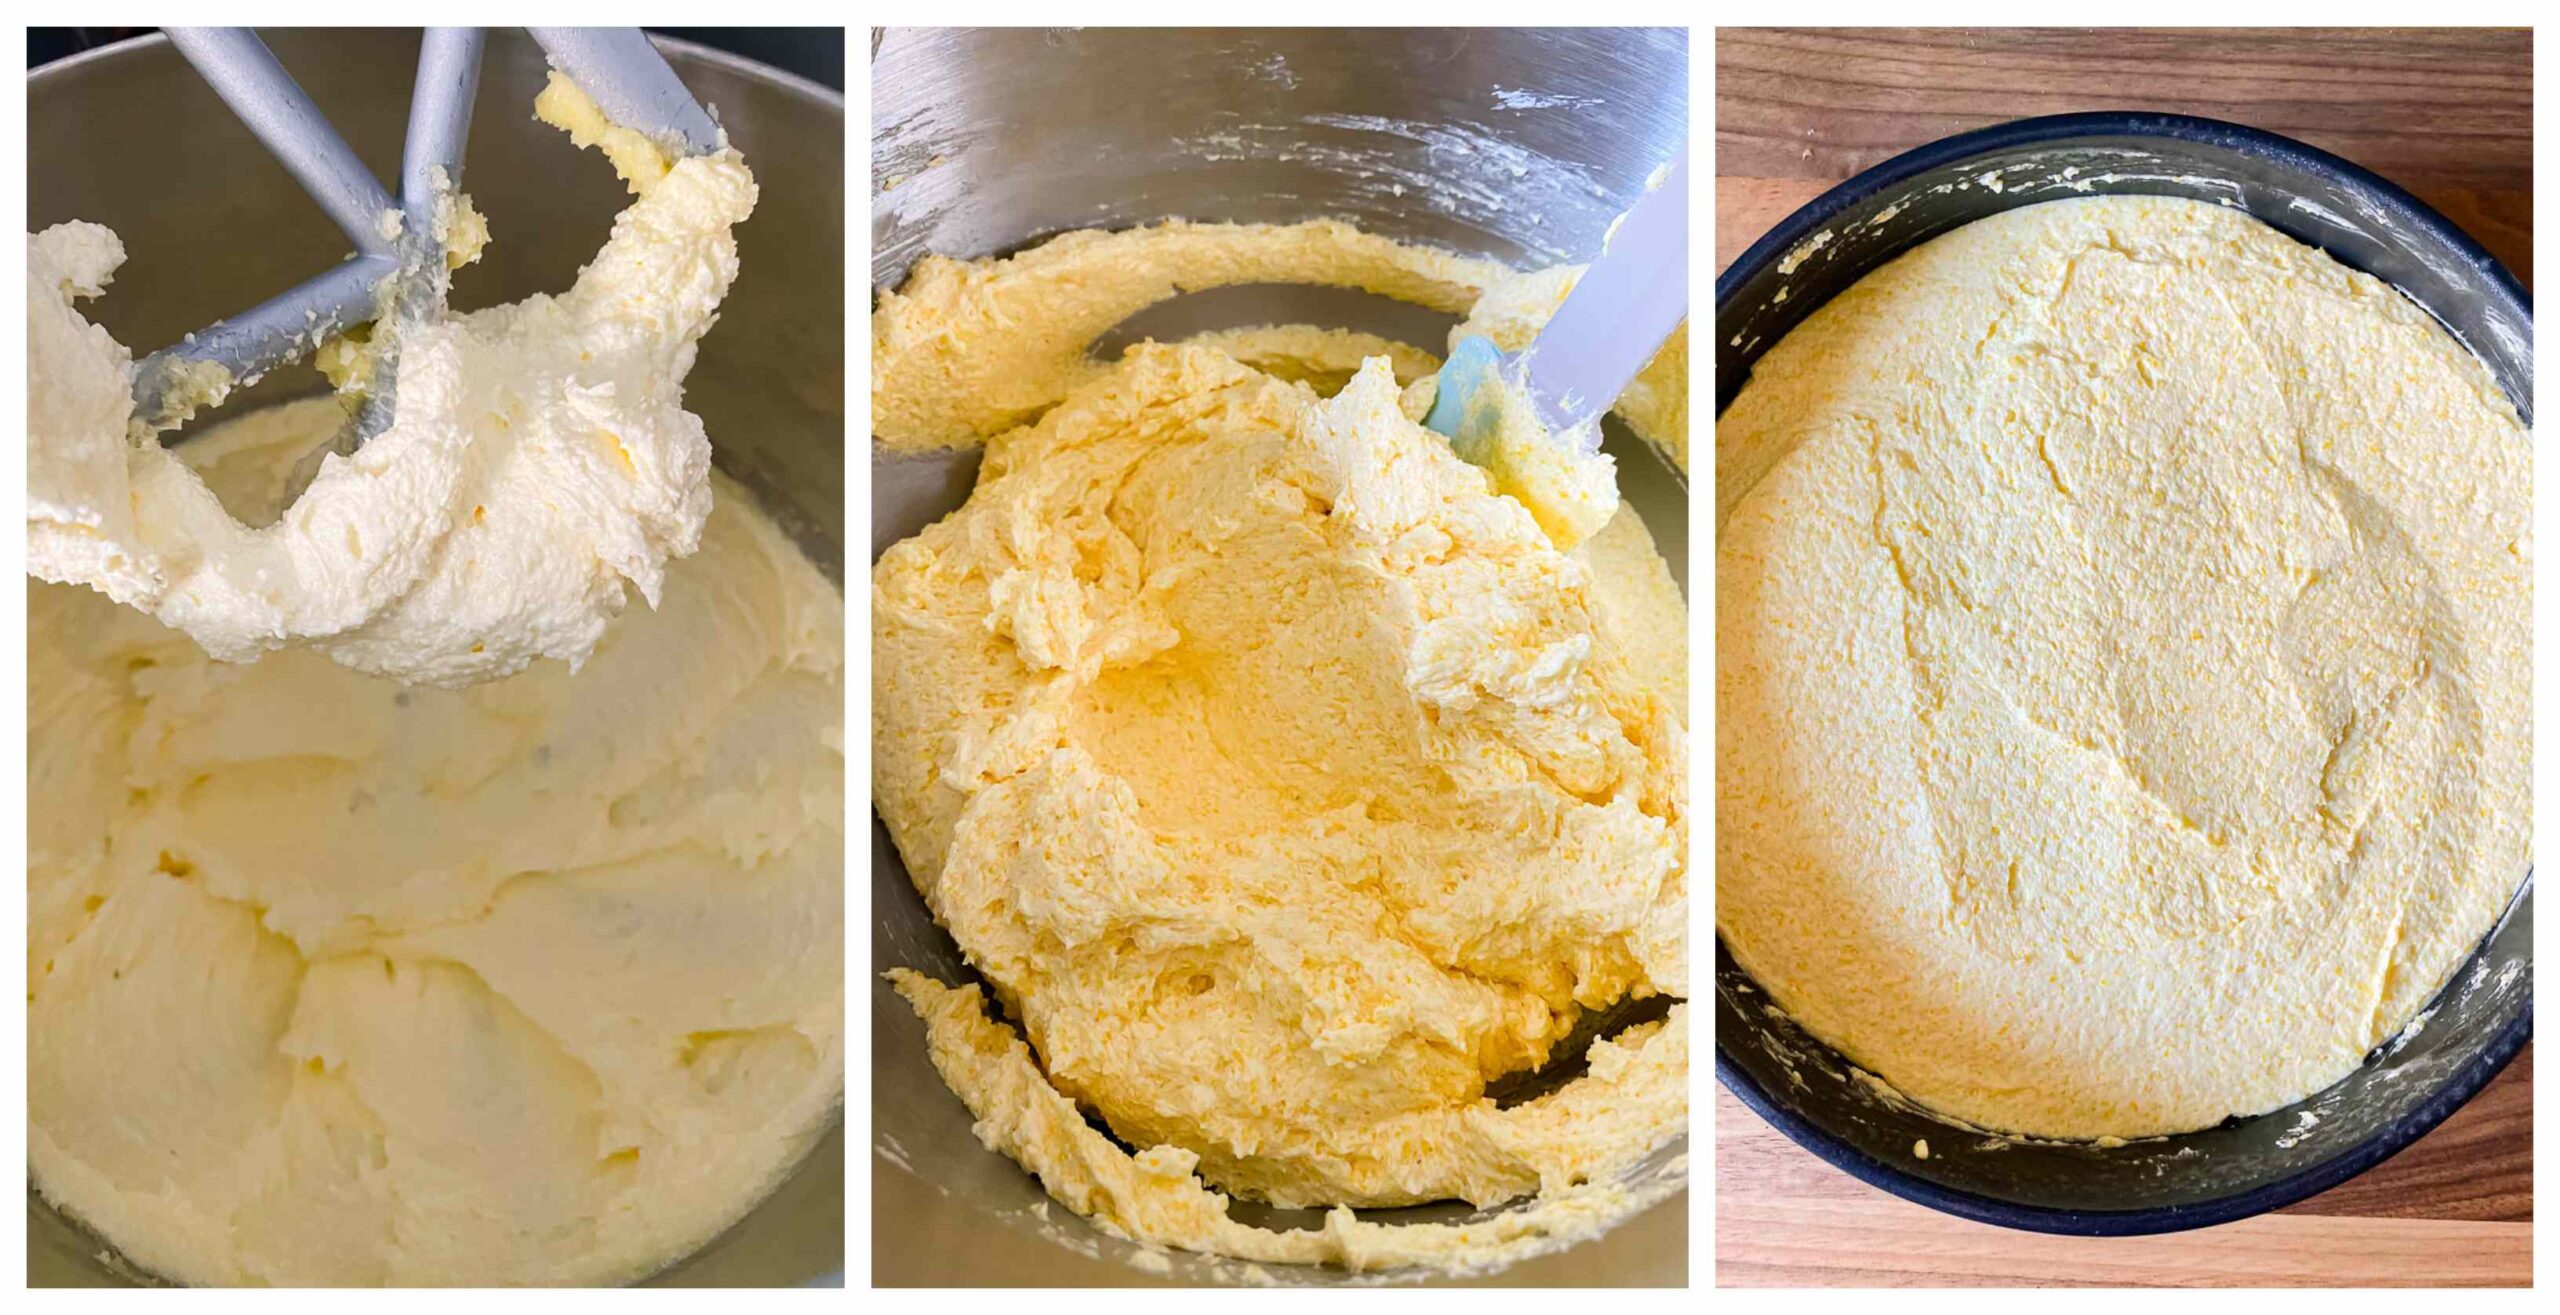 polenta cake process images